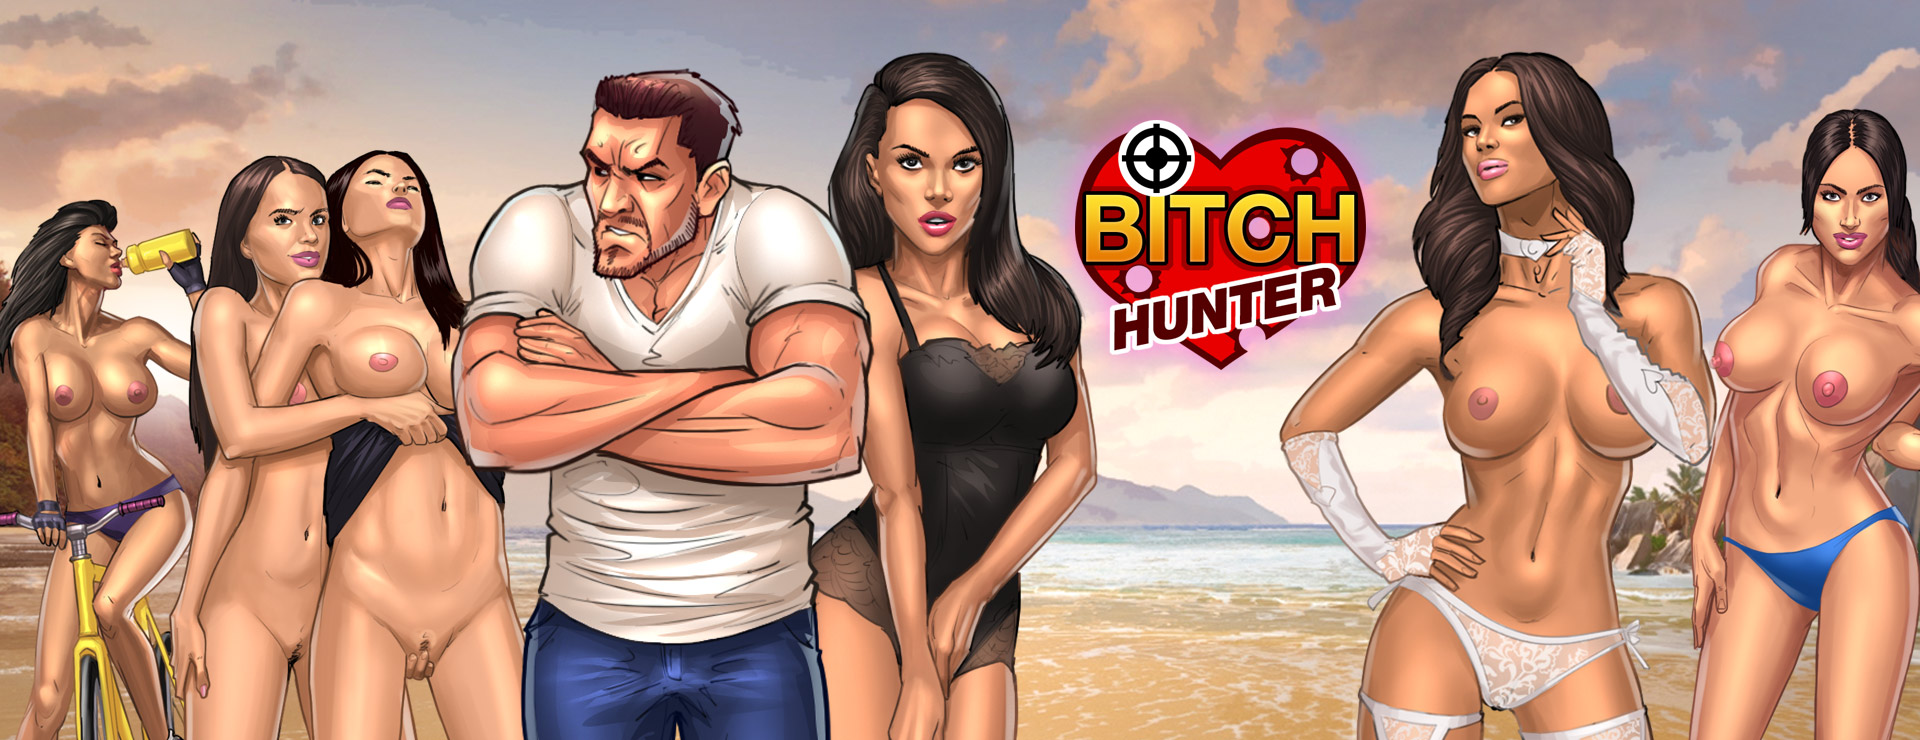 Bitch Hunter - シミュレーション ゲーム